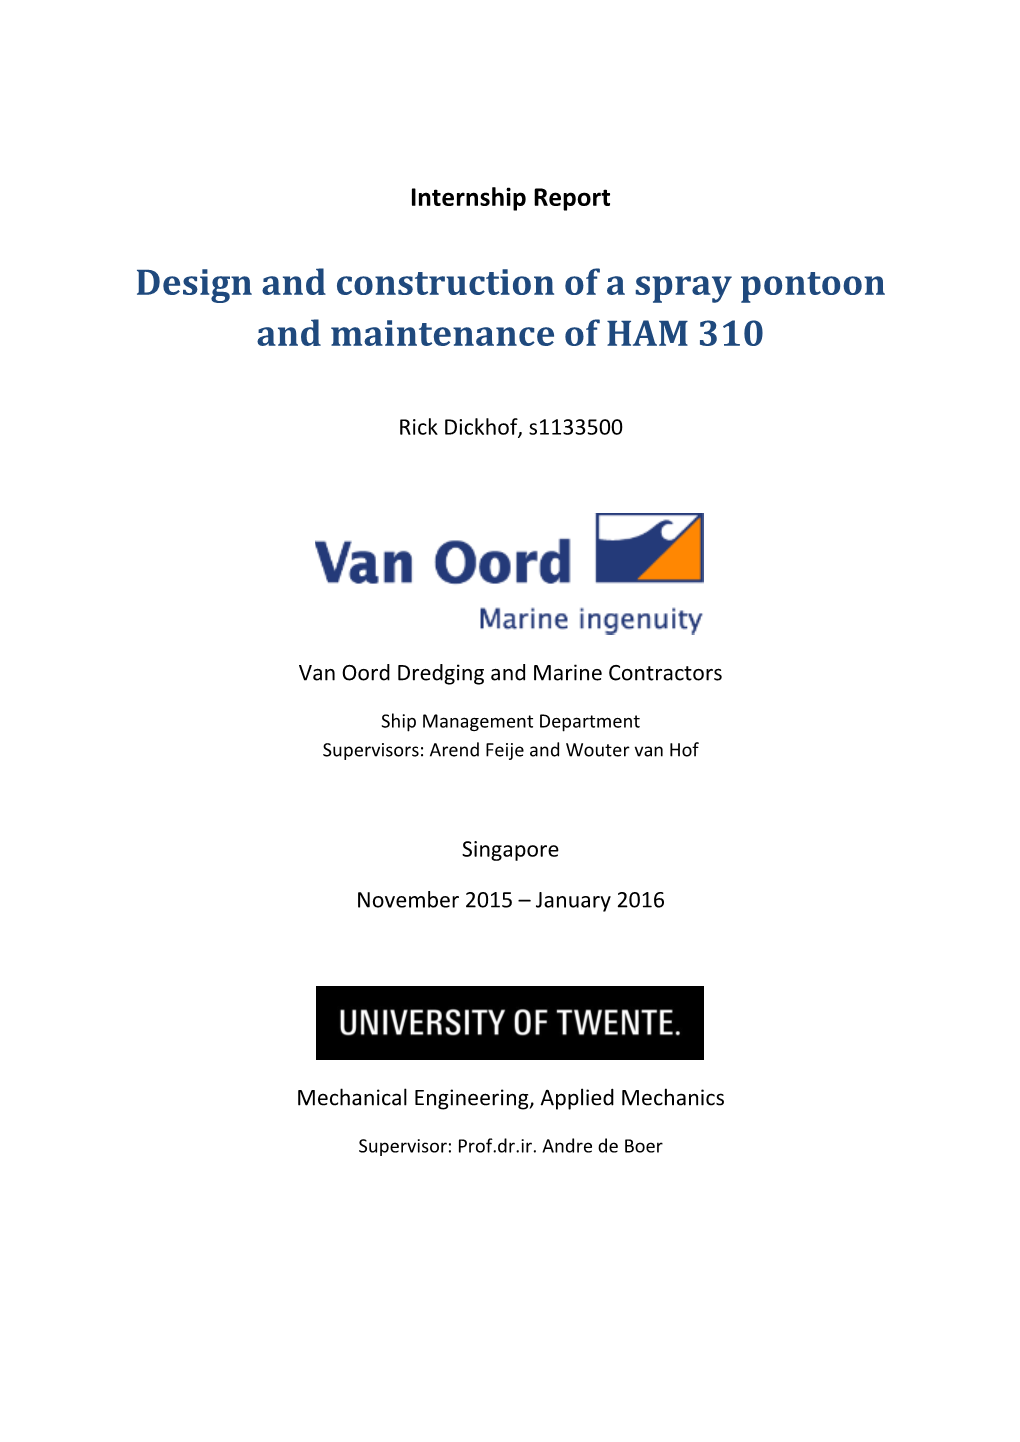 Design and Construction of a Spray Pontoon and Maintenance of HAM 310